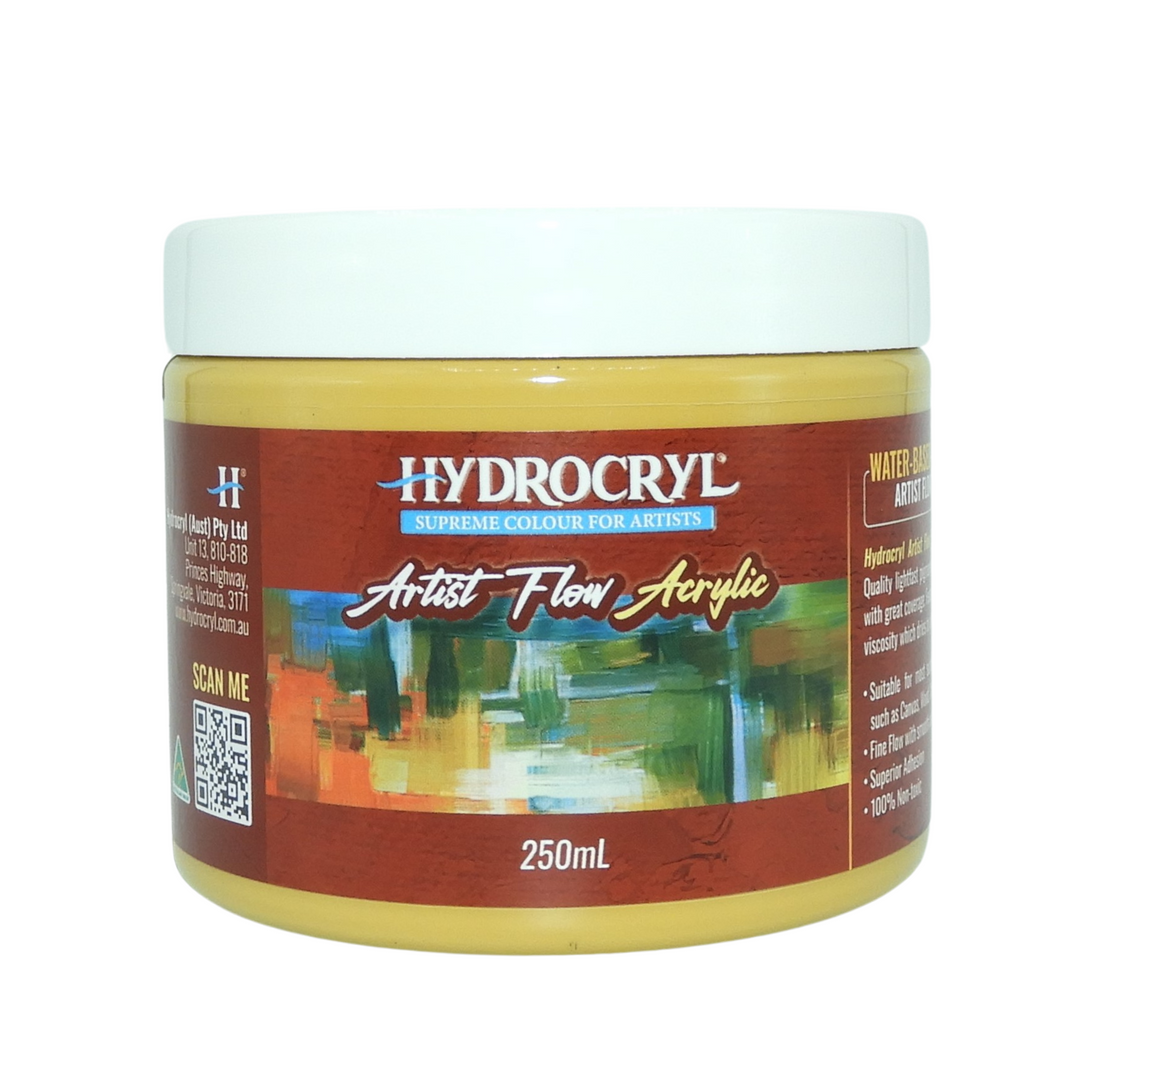 OUTBACK YELLOW OXIDE Hydrocryl Artist Flow Acrylic 250ml